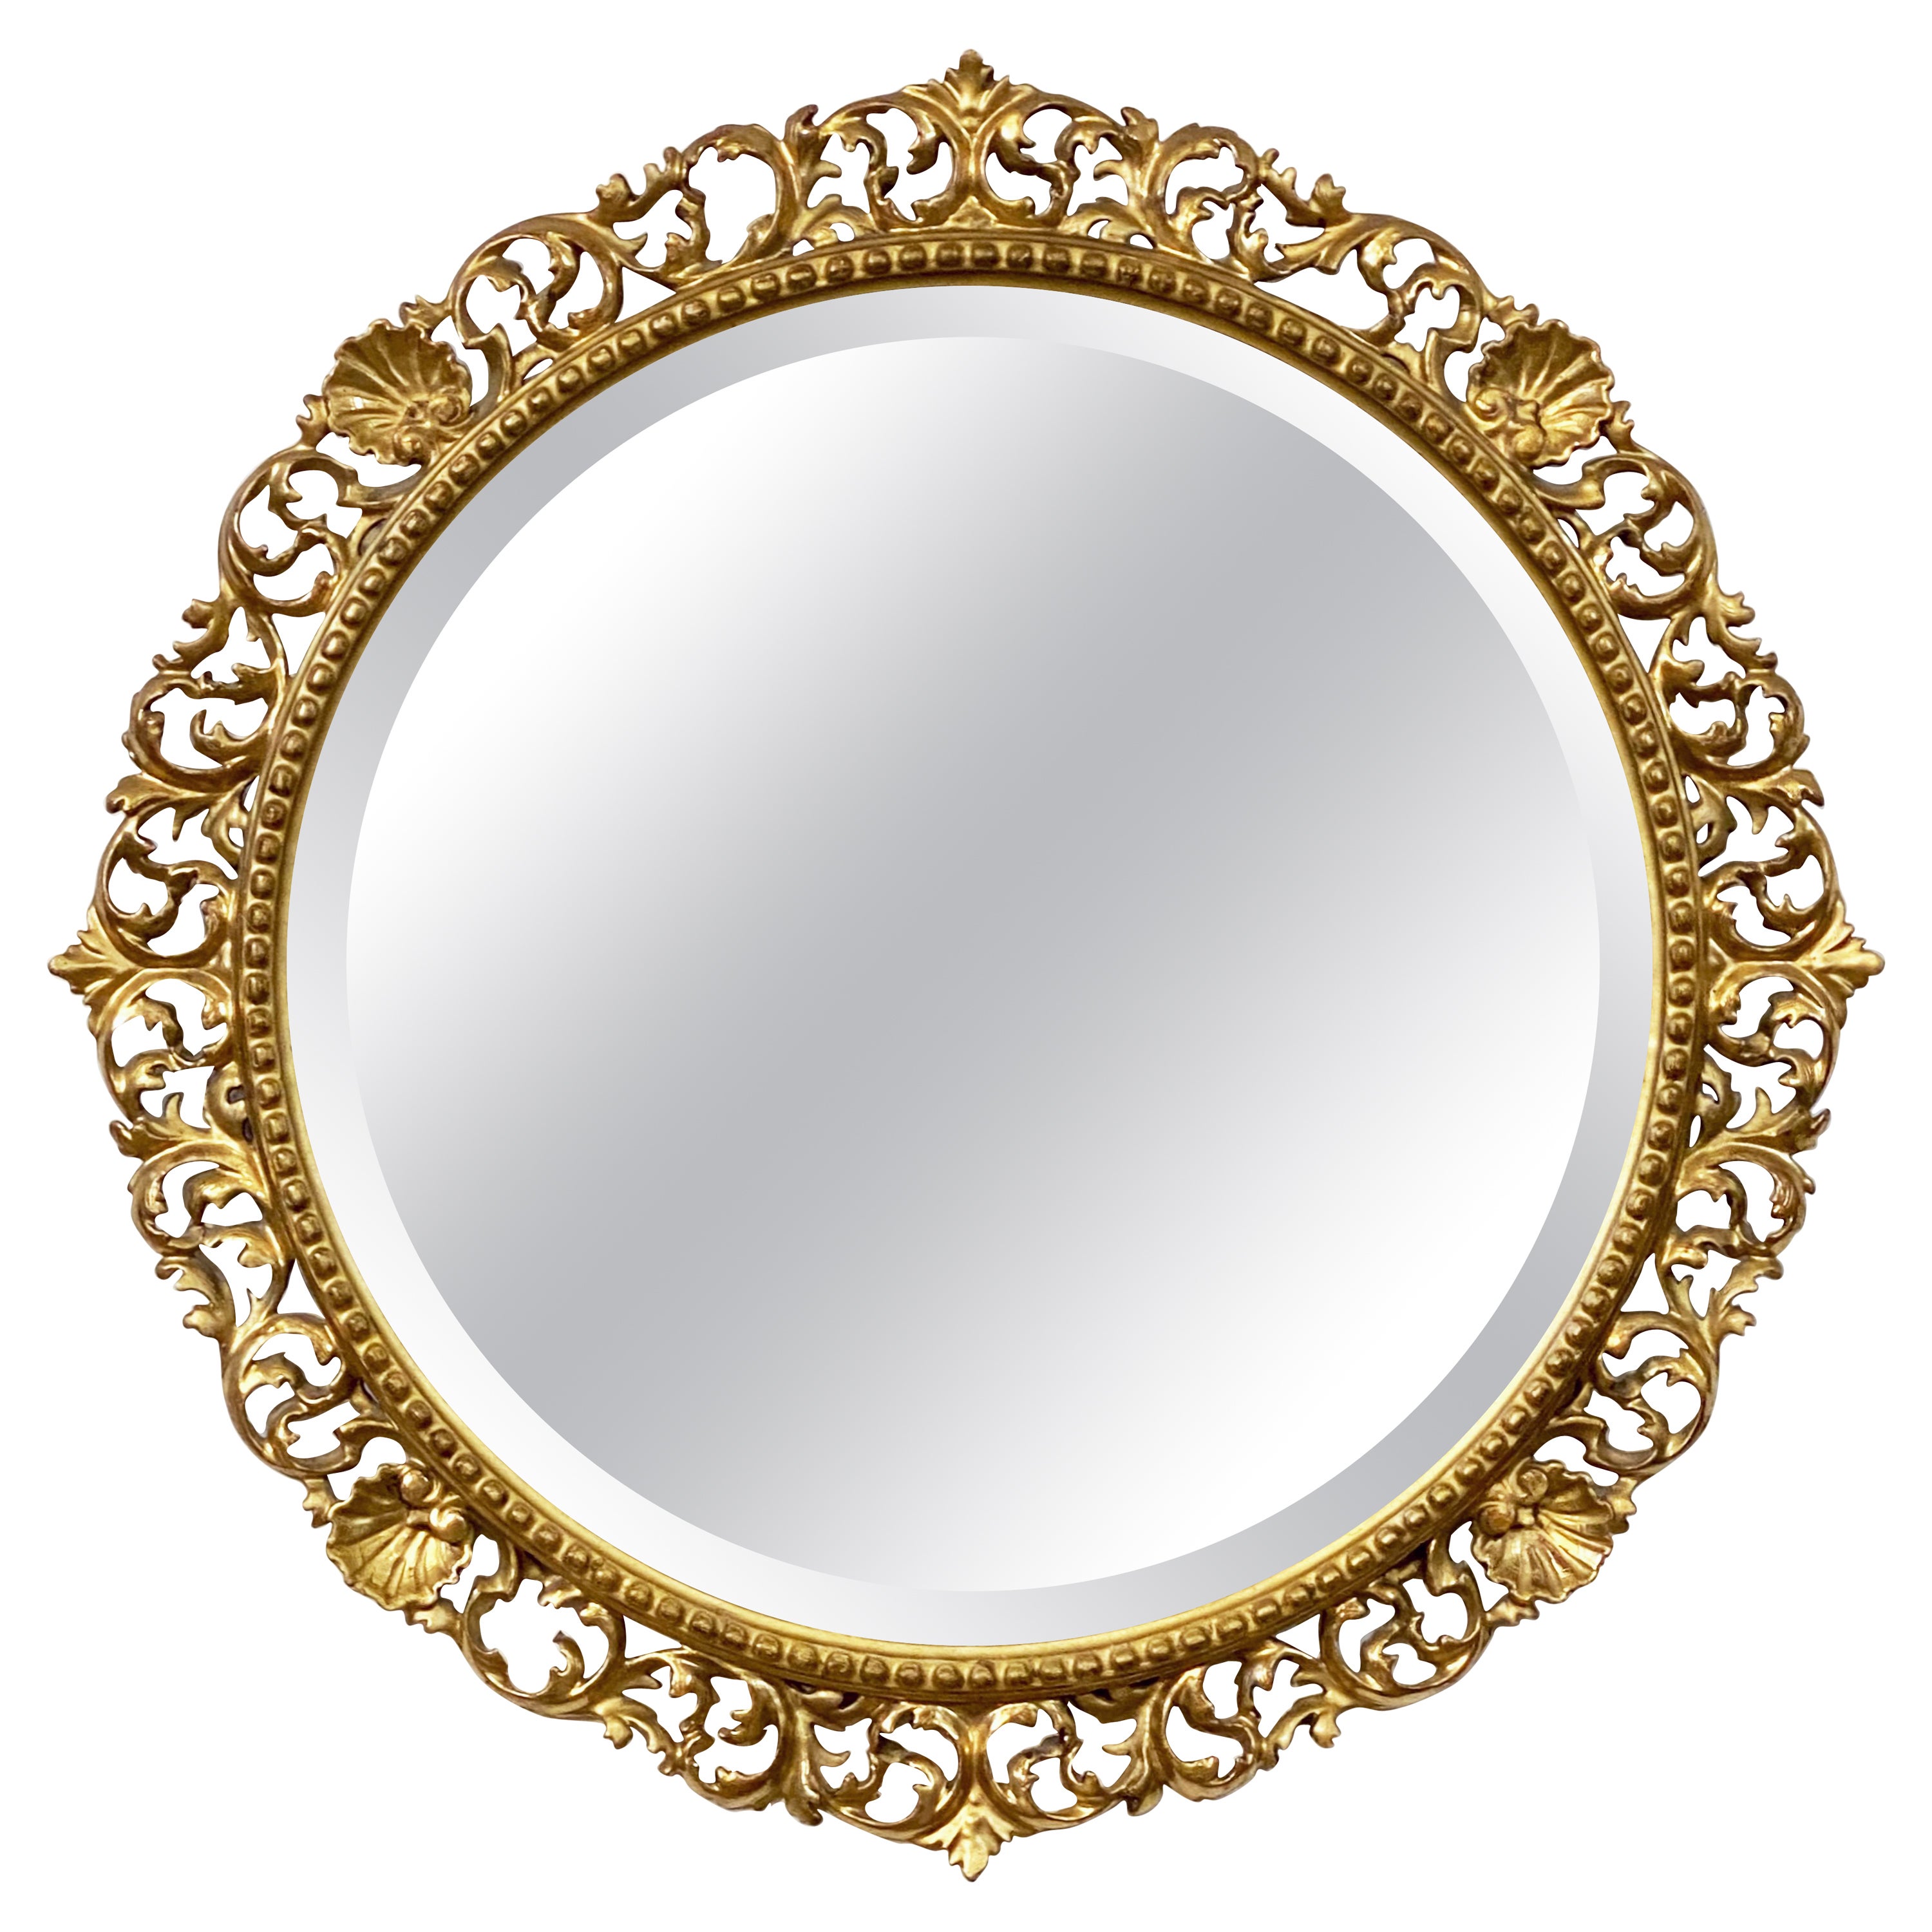 Large Italian Gilt Florentine Round Beveled Mirror (Diameter 27) For Sale